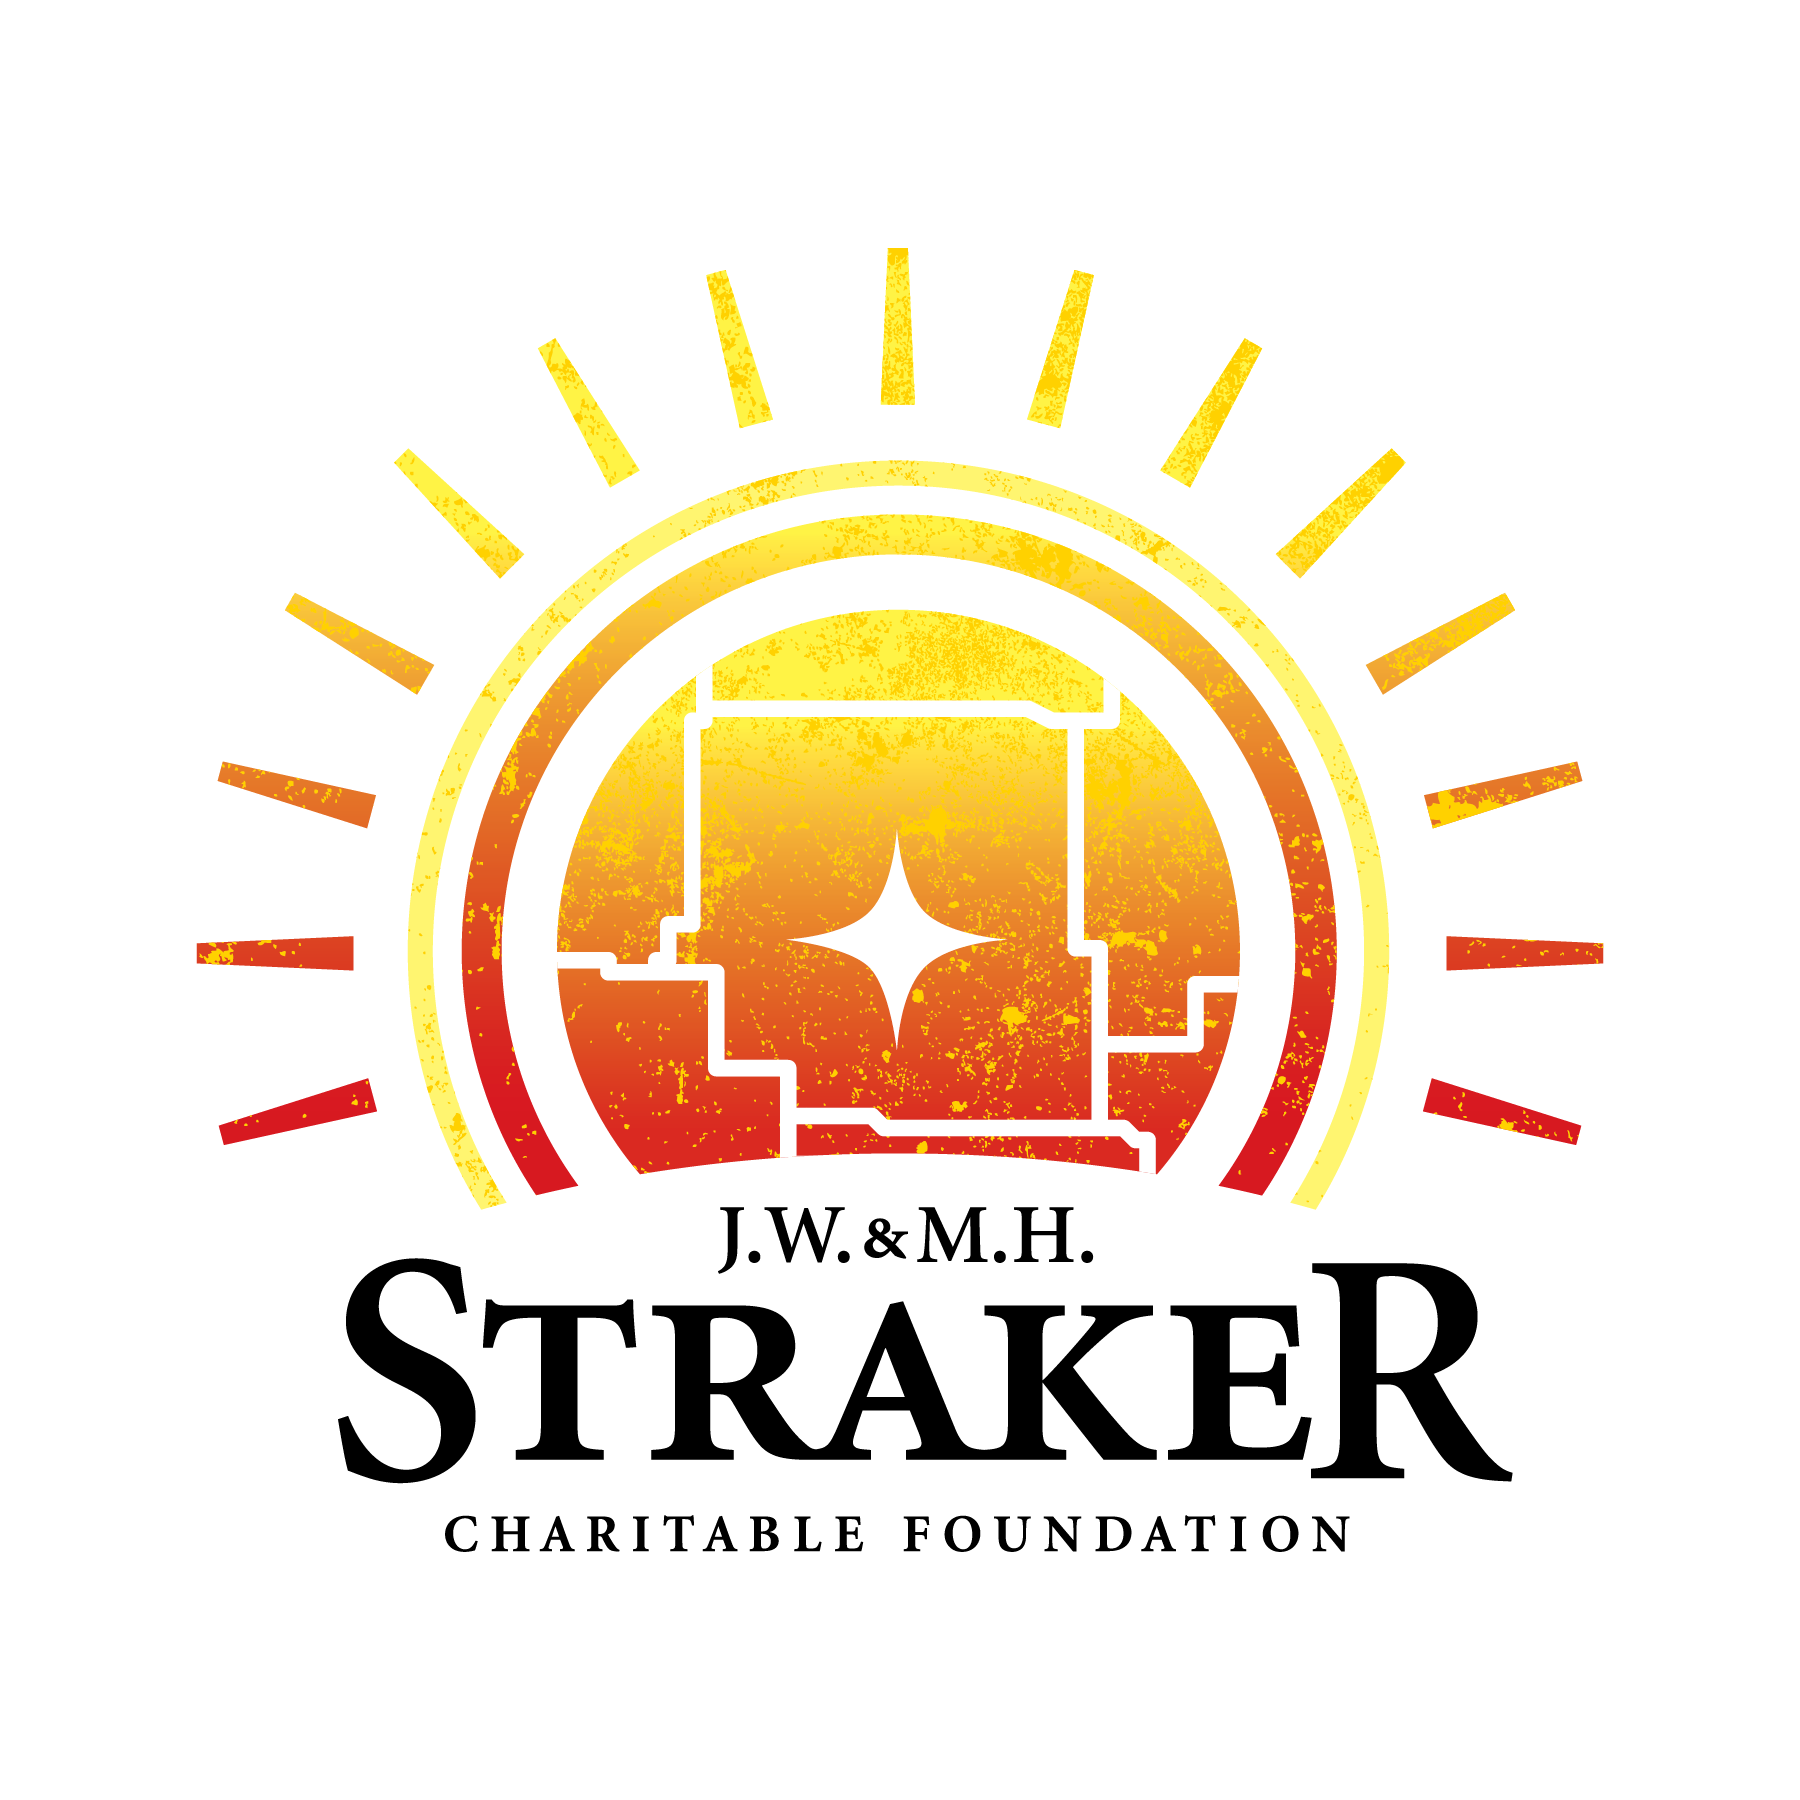 J.W. & M.H. Straker Foundation